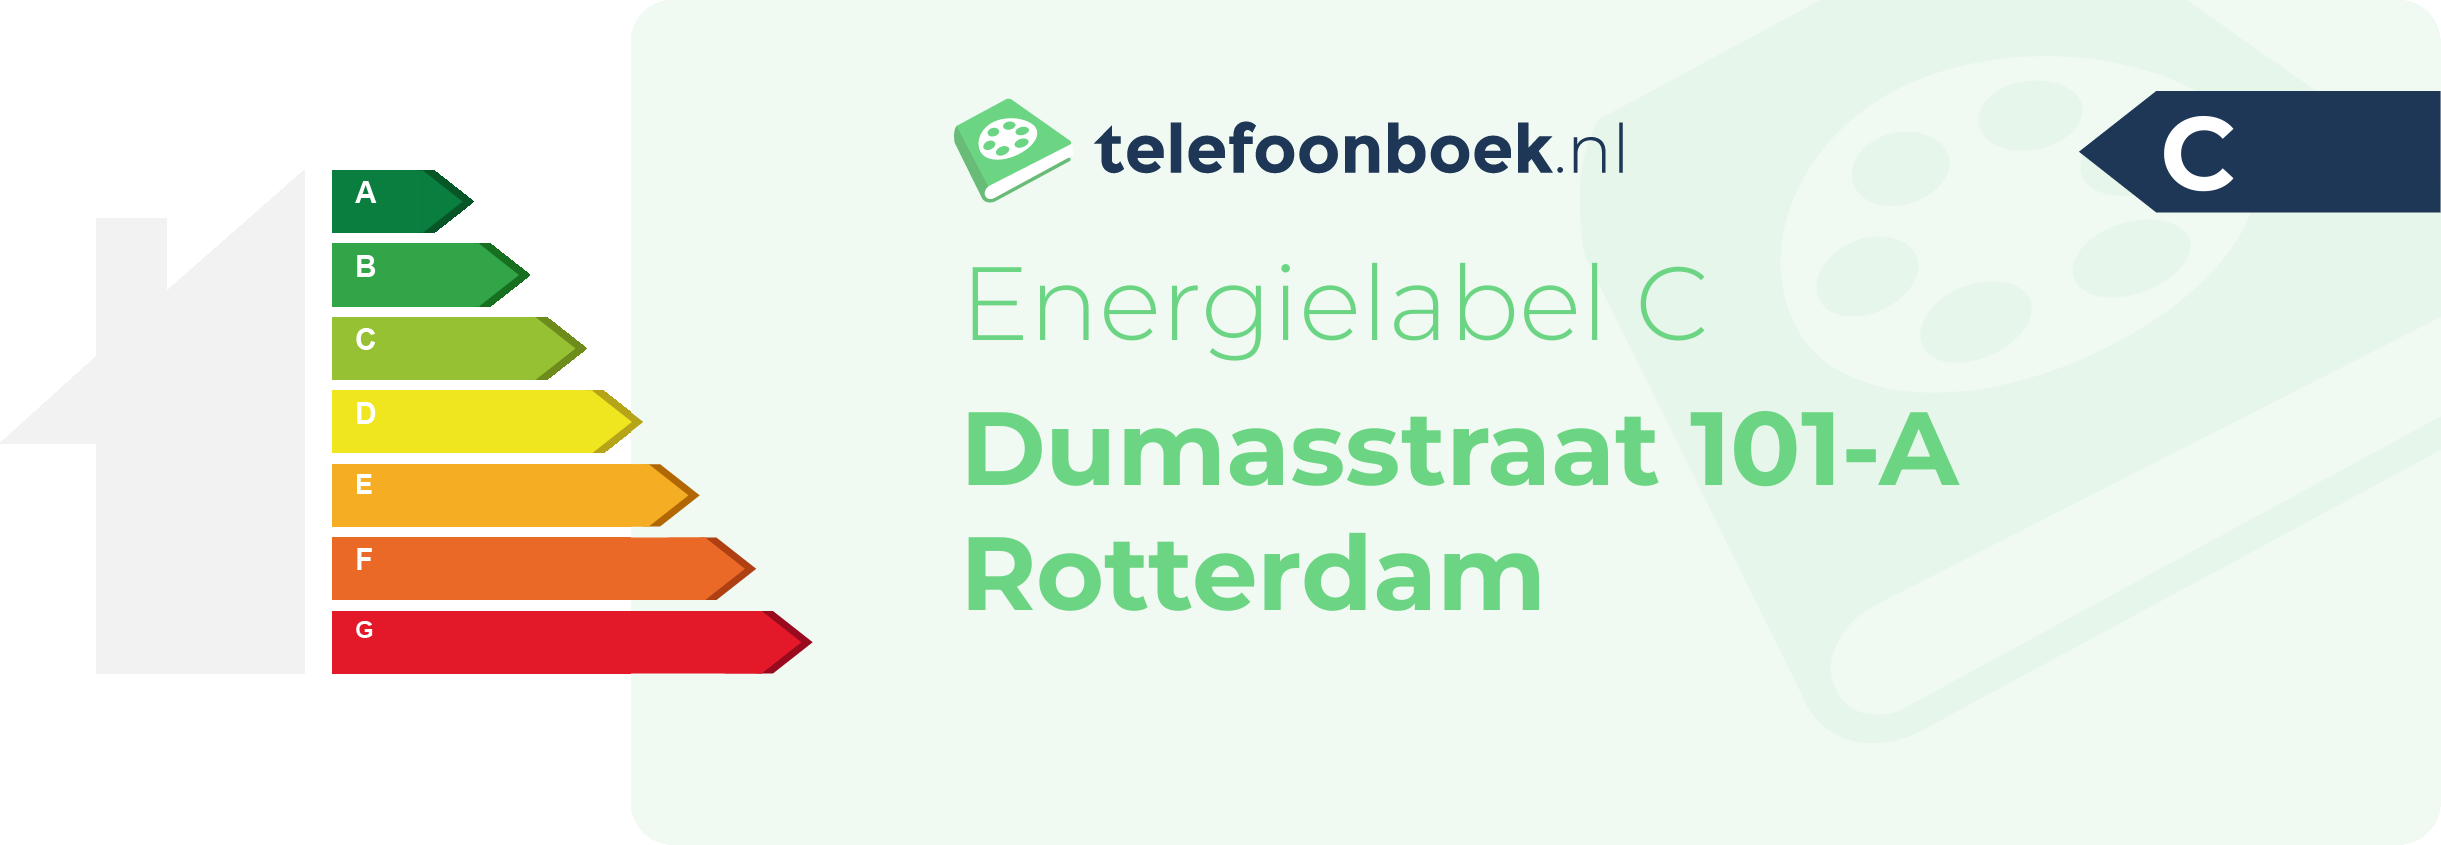 Energielabel Dumasstraat 101-A Rotterdam